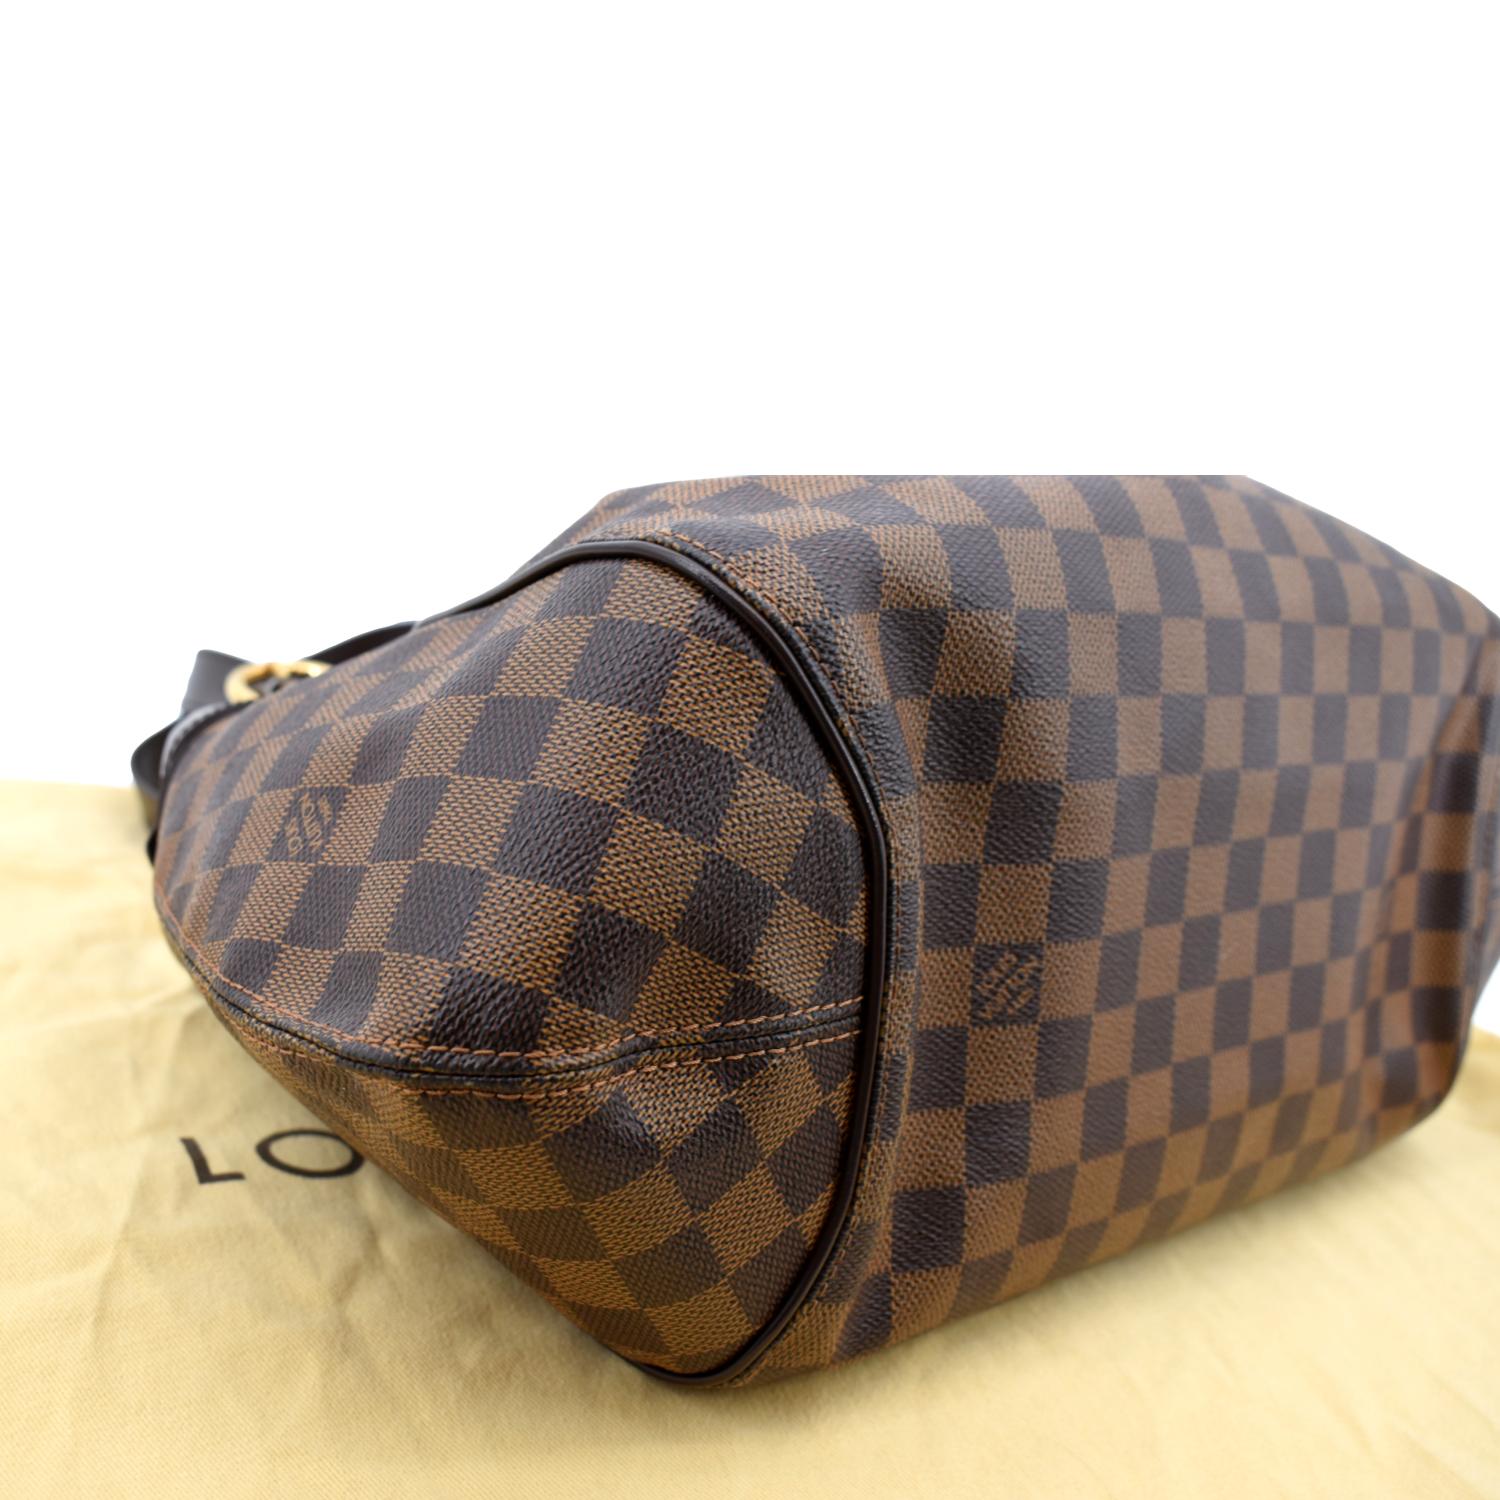 Louis Vuitton Sistina MM Women's Shoulder Bag N41541 Damier Ebene (Brown)